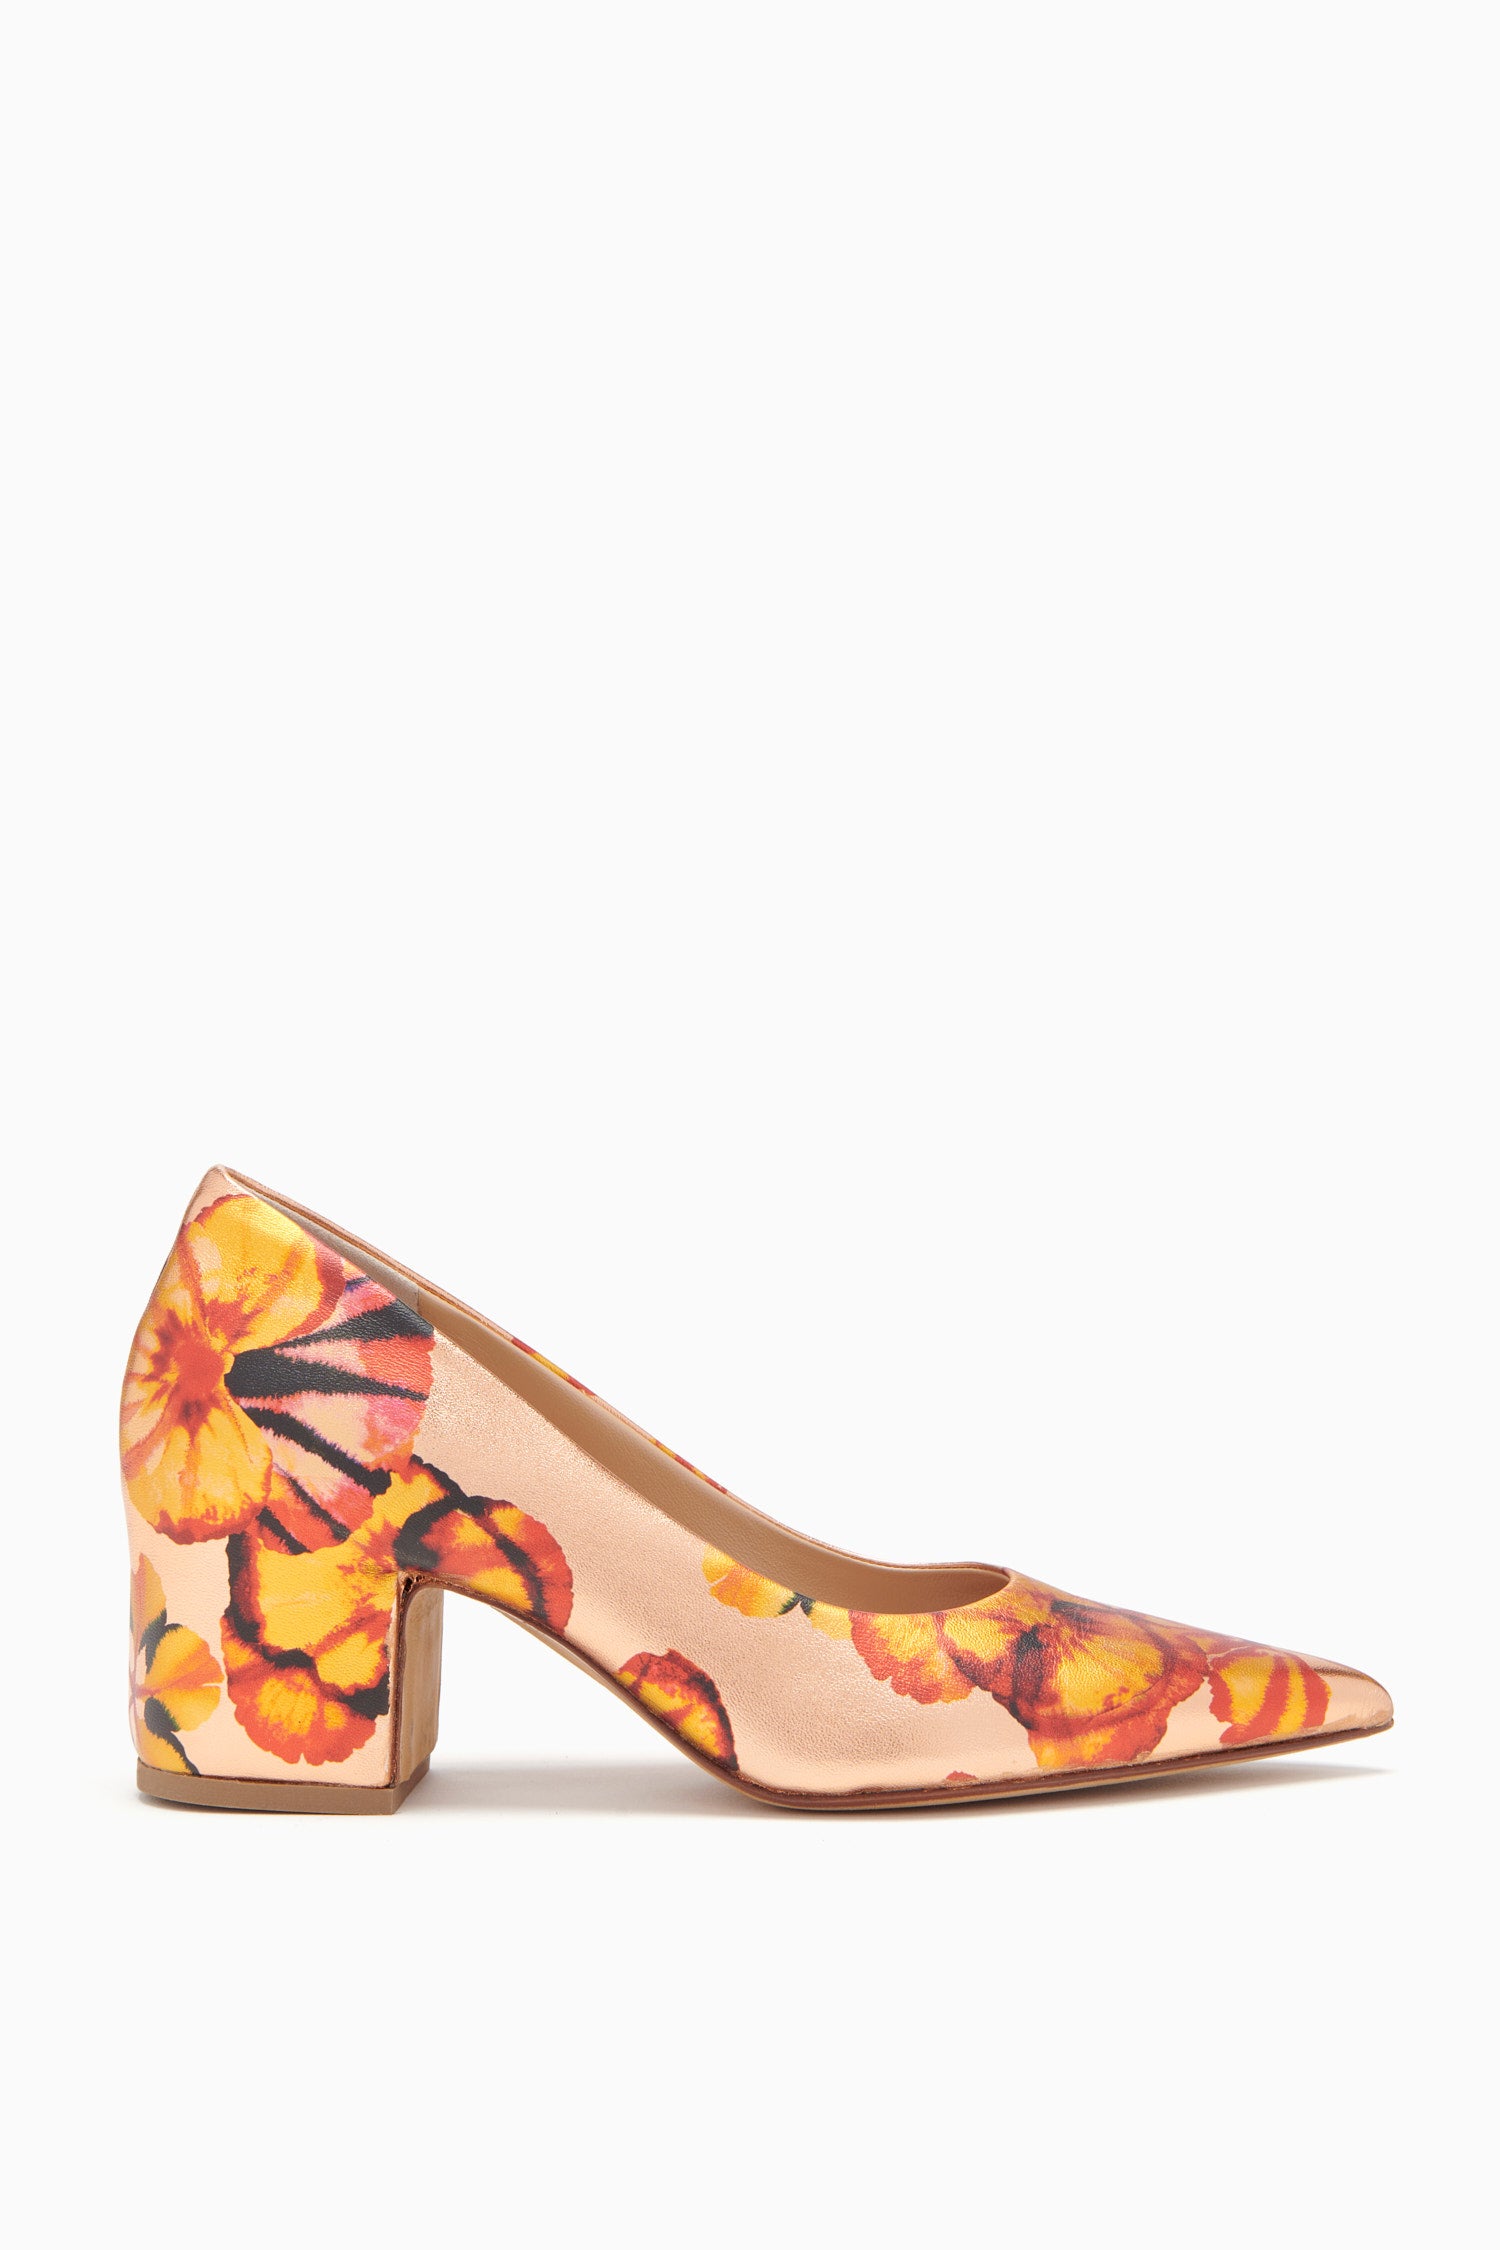 Floral Embroidered Block Heels | Heels, Fashion shoes, Comfy heels